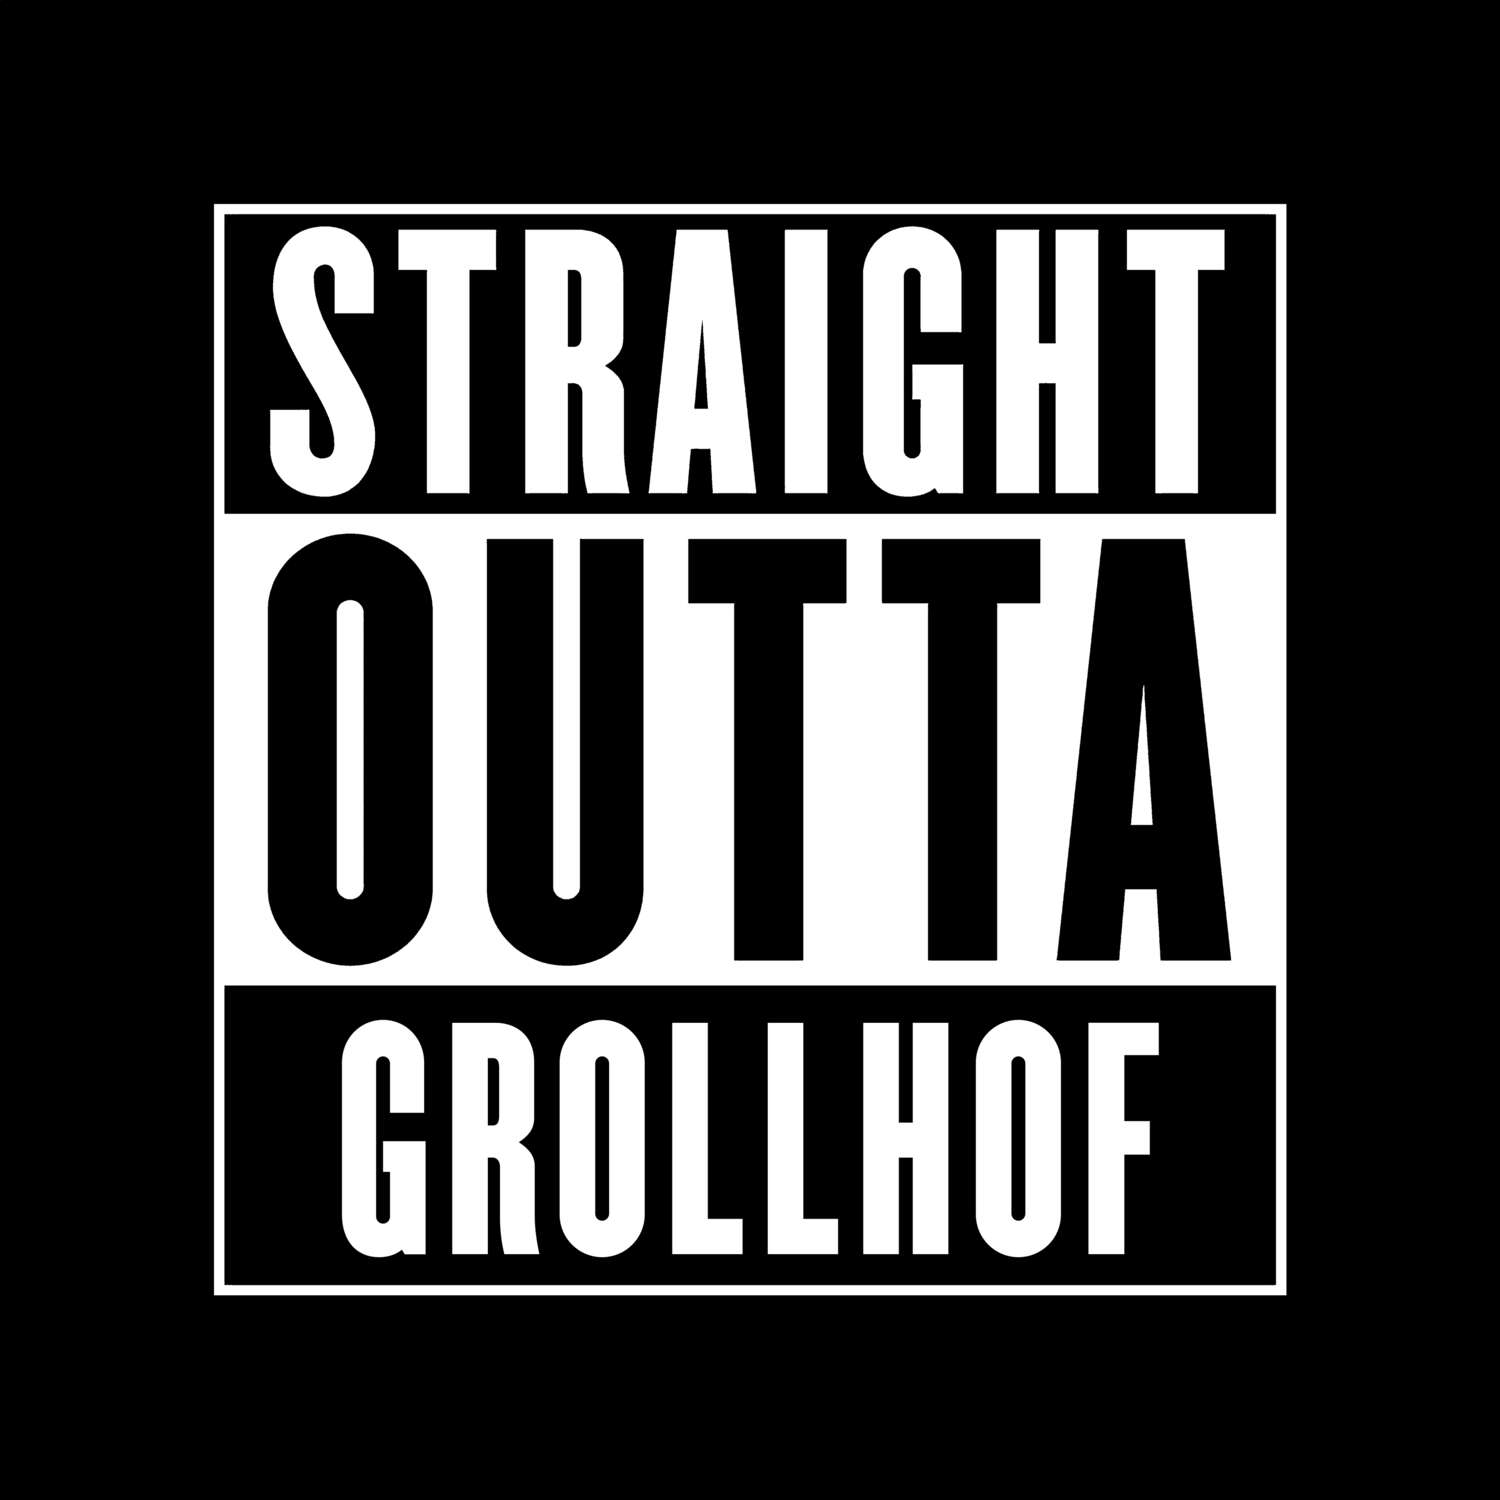 Grollhof T-Shirt »Straight Outta«